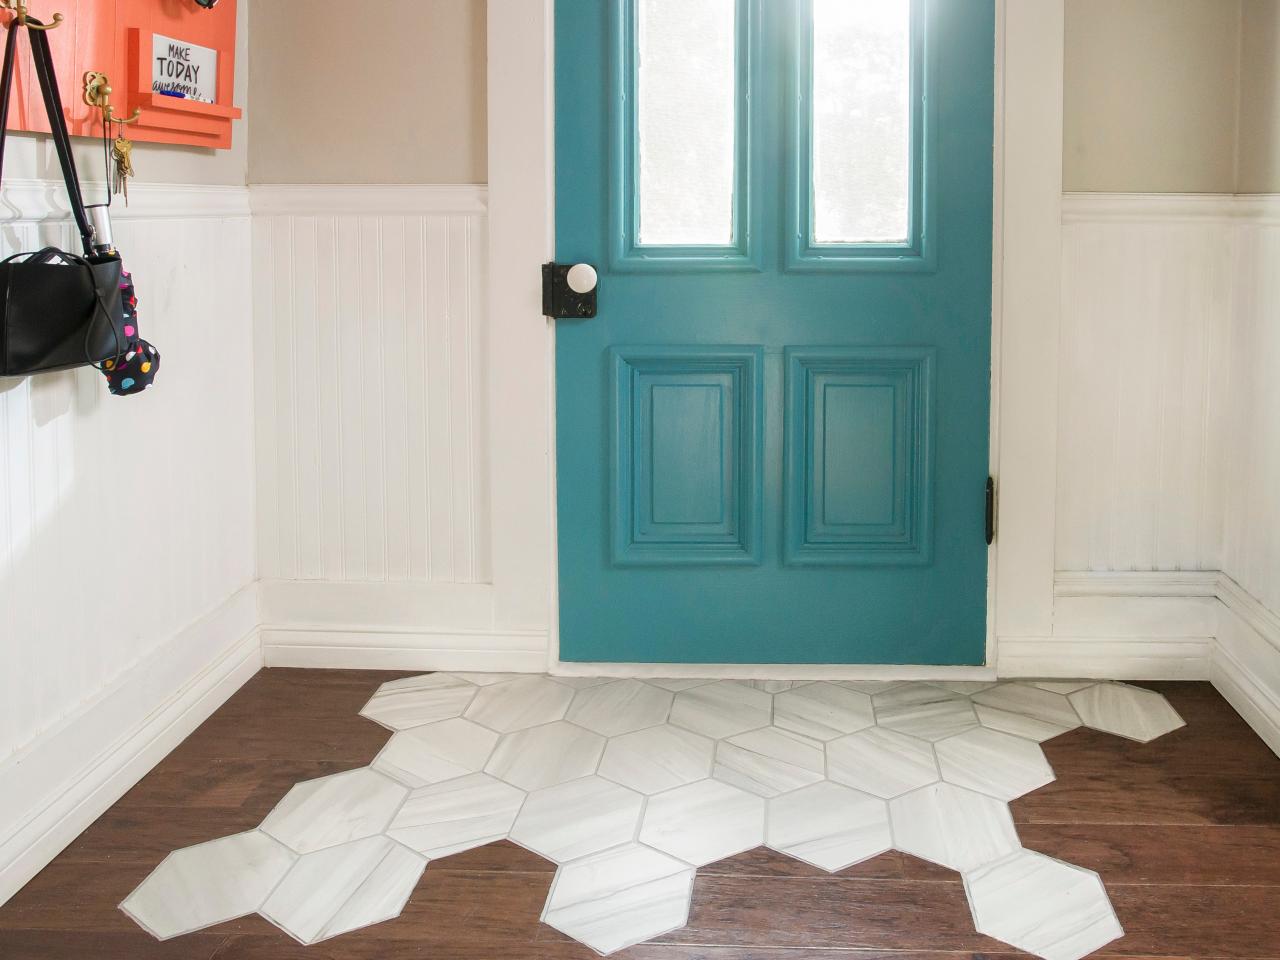 A Tile Rug Within Hardwood Floor, Can You Install Ceramic Tile Over Hardwood Floors